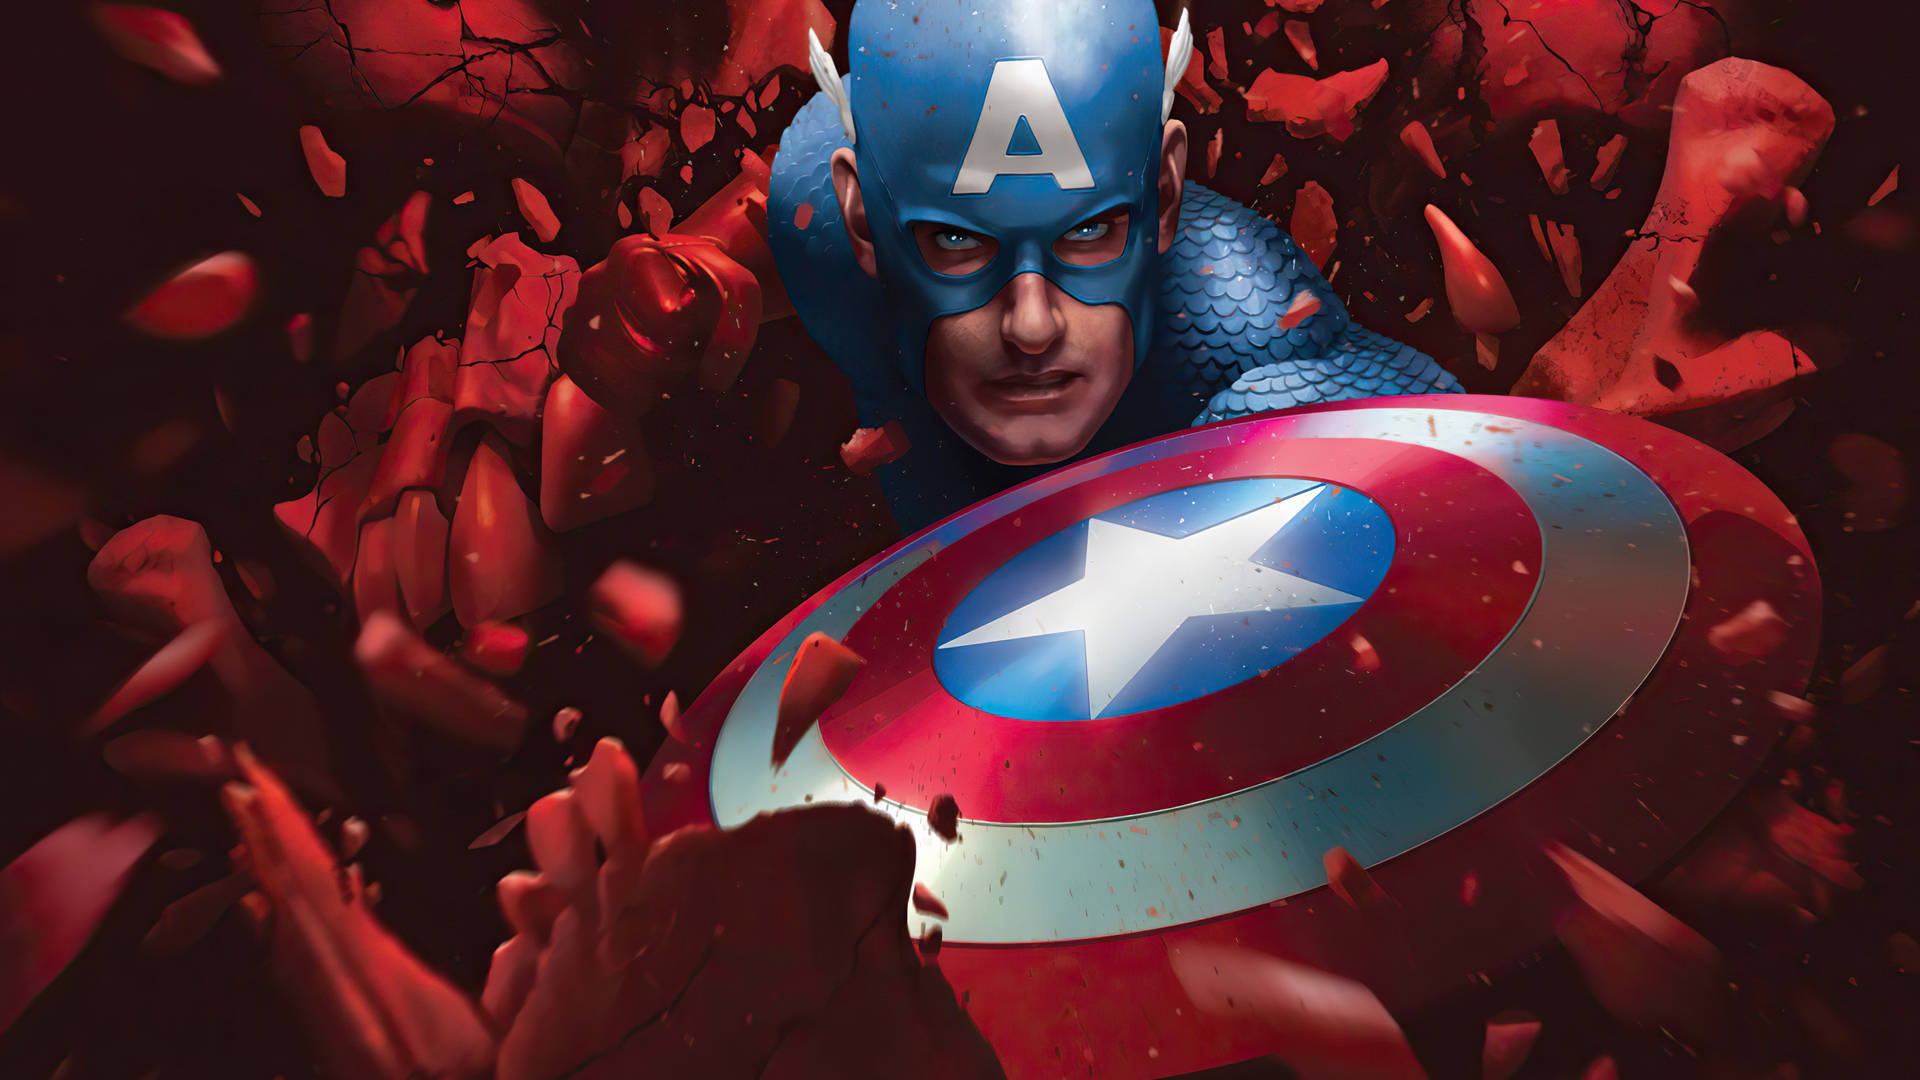 Free Captain America Wallpaper Downloads 300 Captain America Wallpapers  for FREE  Wallpaperscom